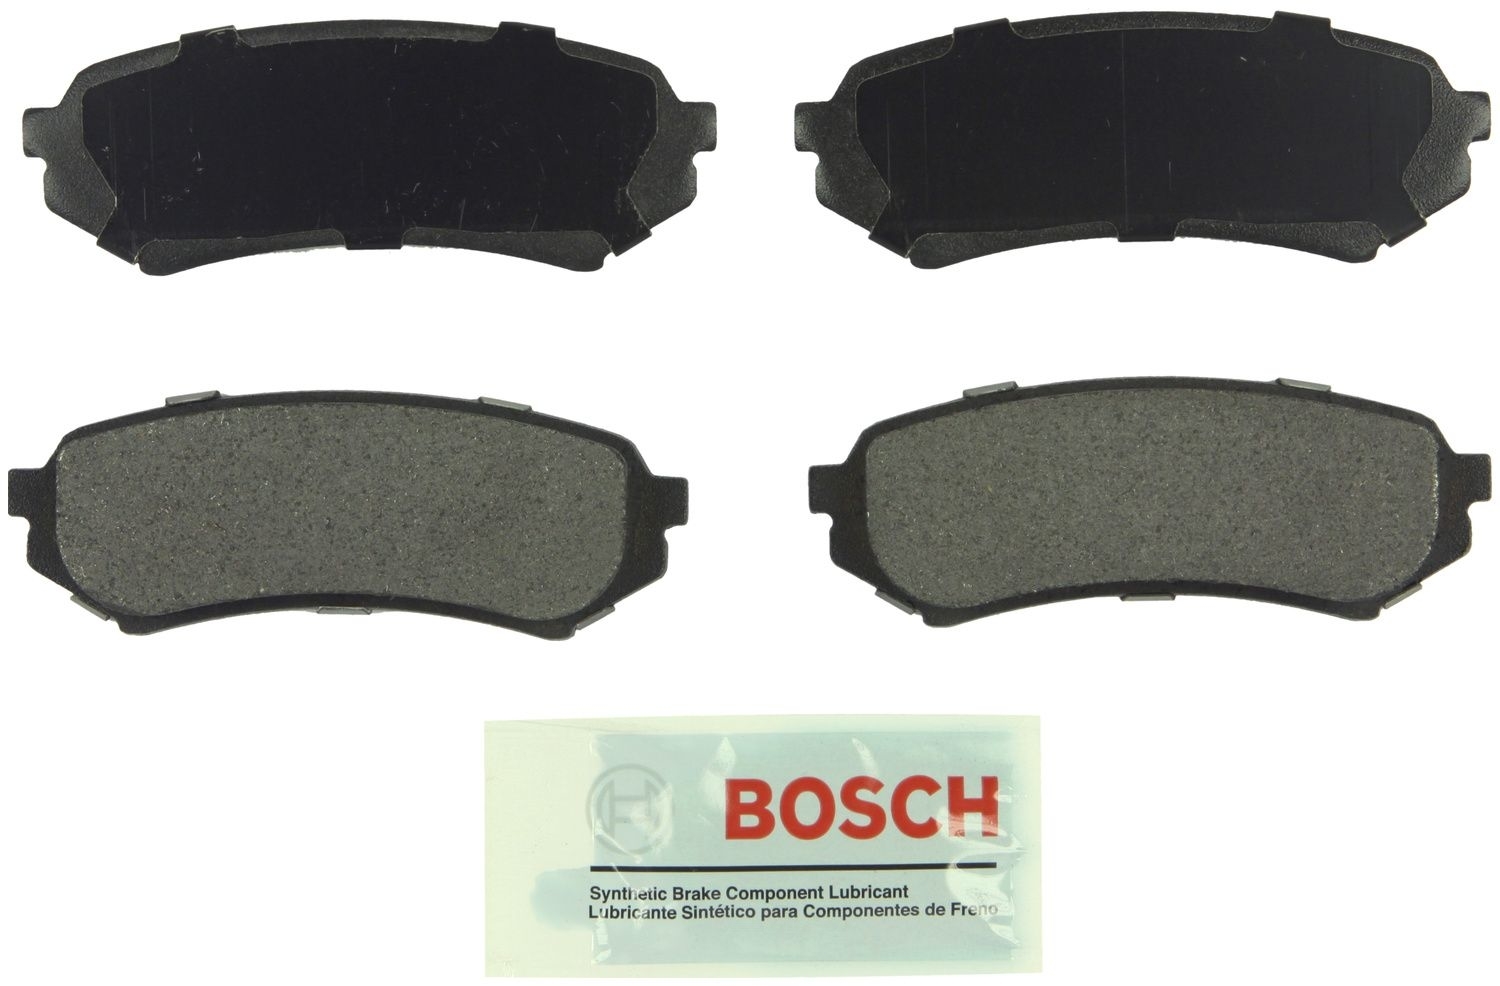 BOSCH BRAKE - Bosch Blue Ceramic Brake Pads (Rear) - BQC BE773